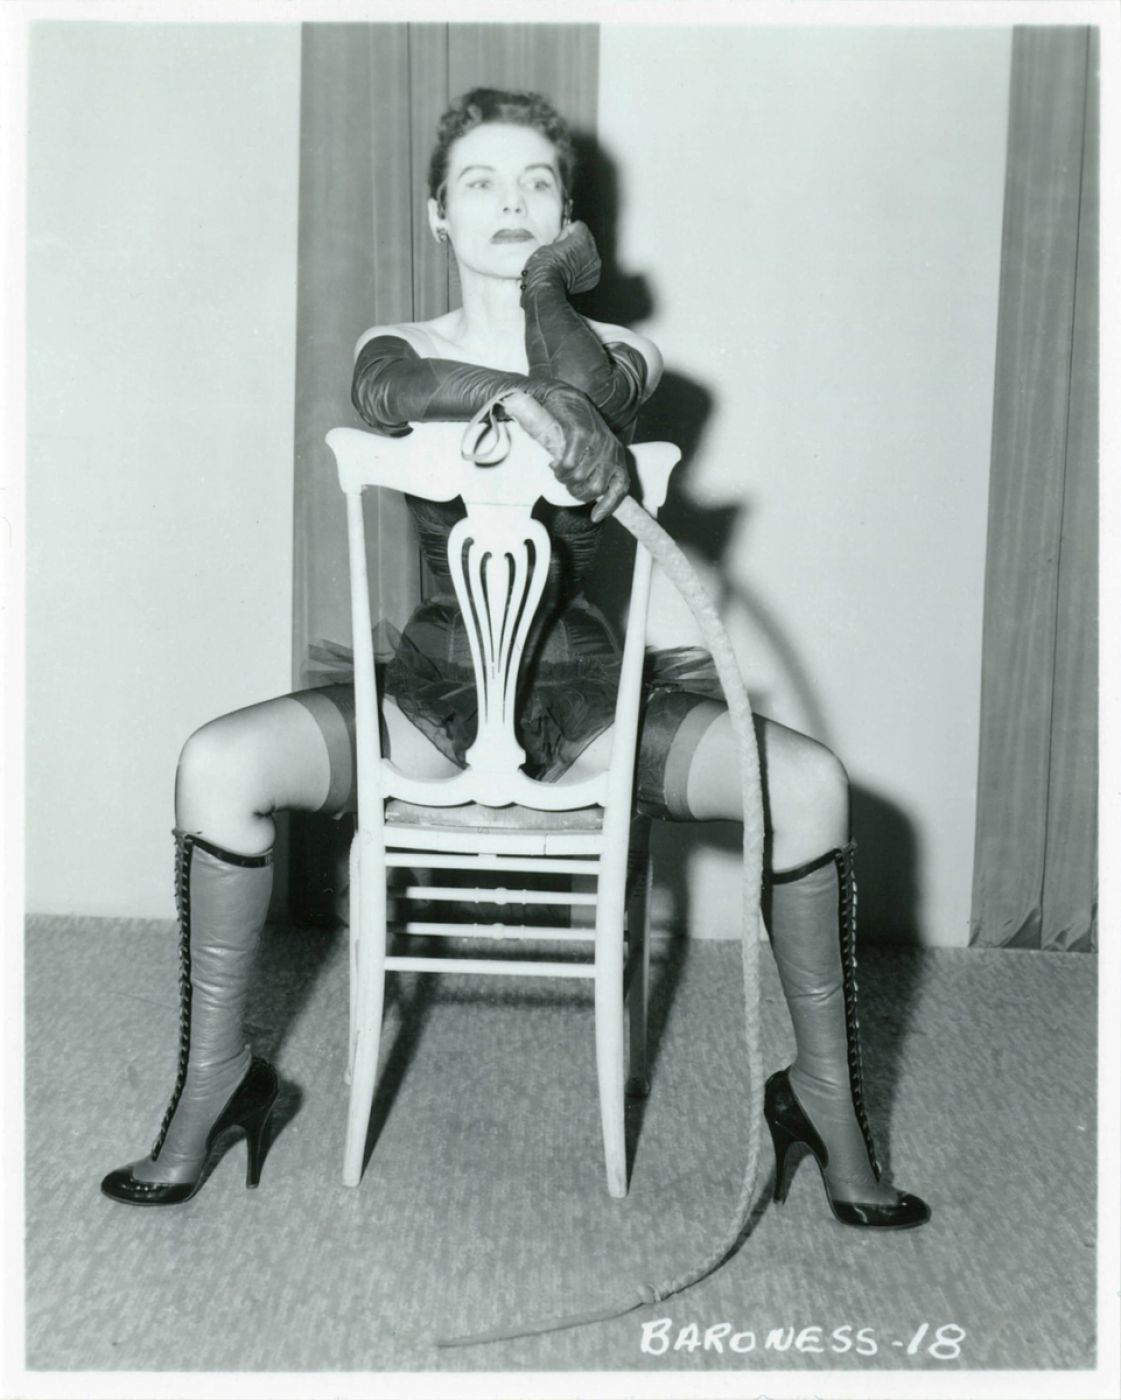 Irving Klaw, “Baroness”, 1950 ca.